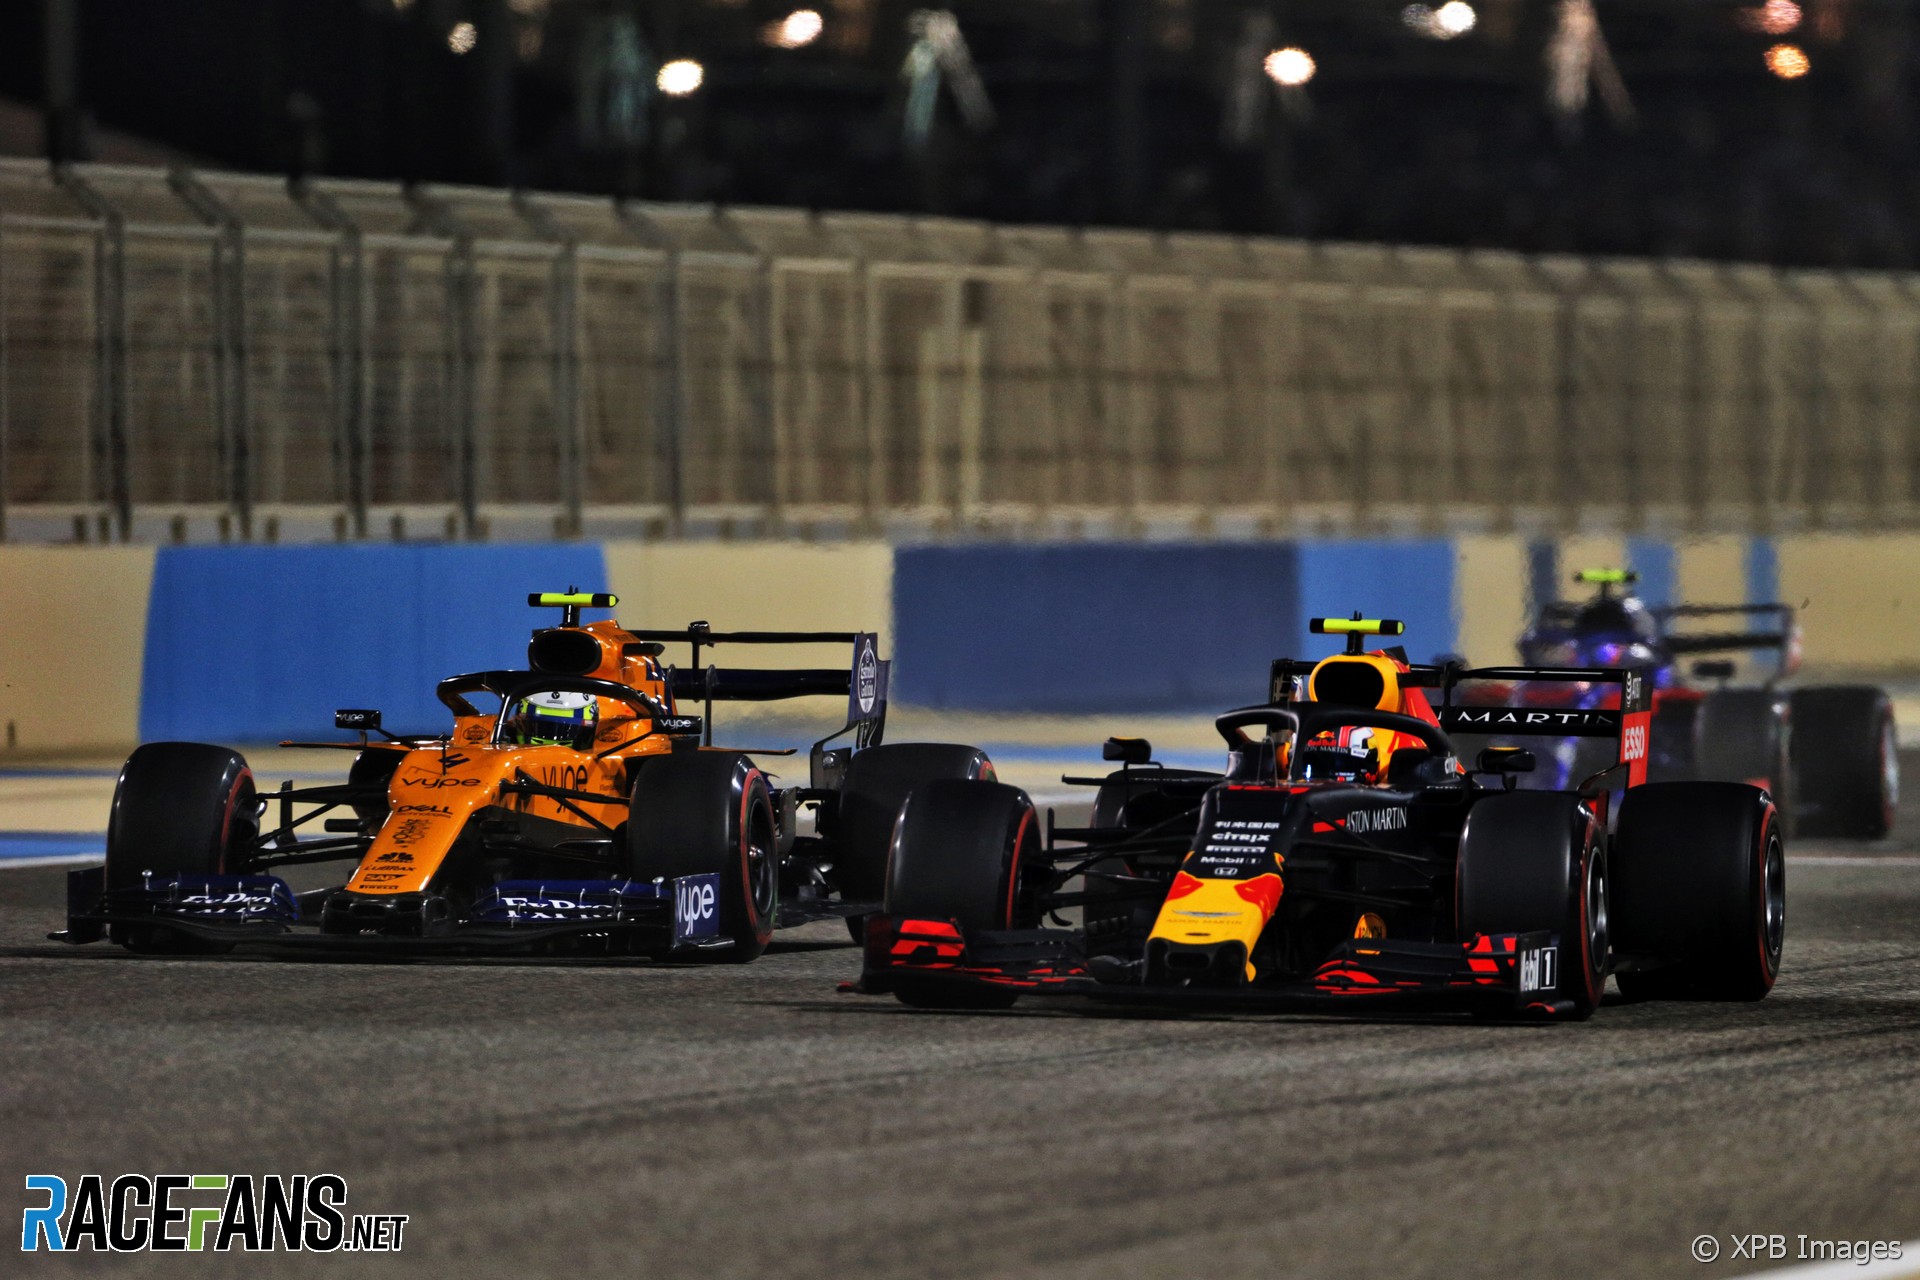 Pierre Gasly, Lando Norris, Bahrain International Circuit, 2019